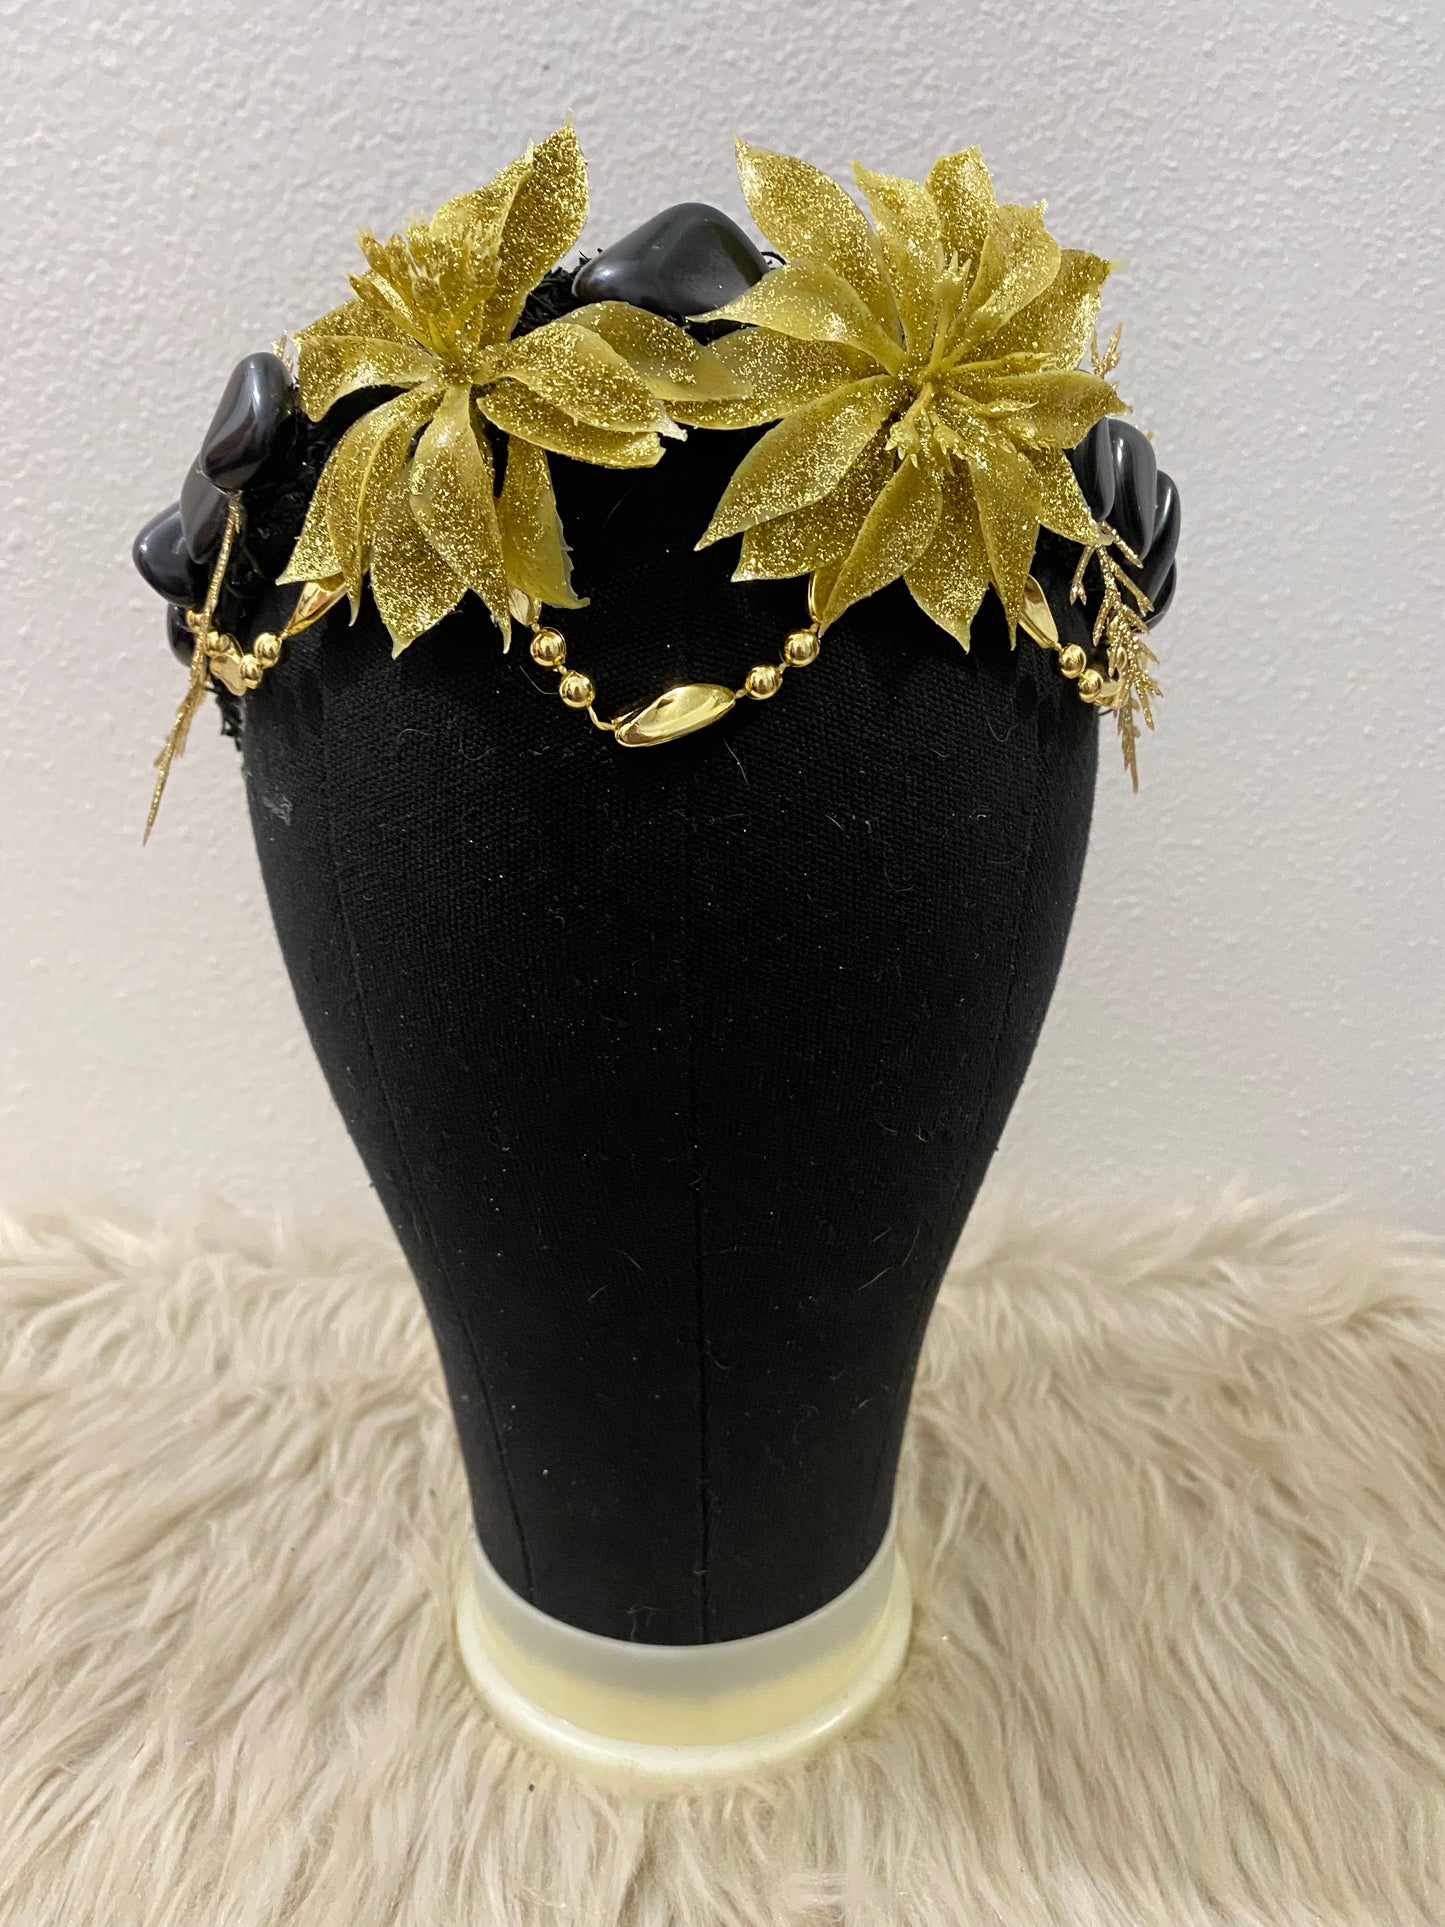 Black & Gold Cuetlaxochitl Obsidian Crown